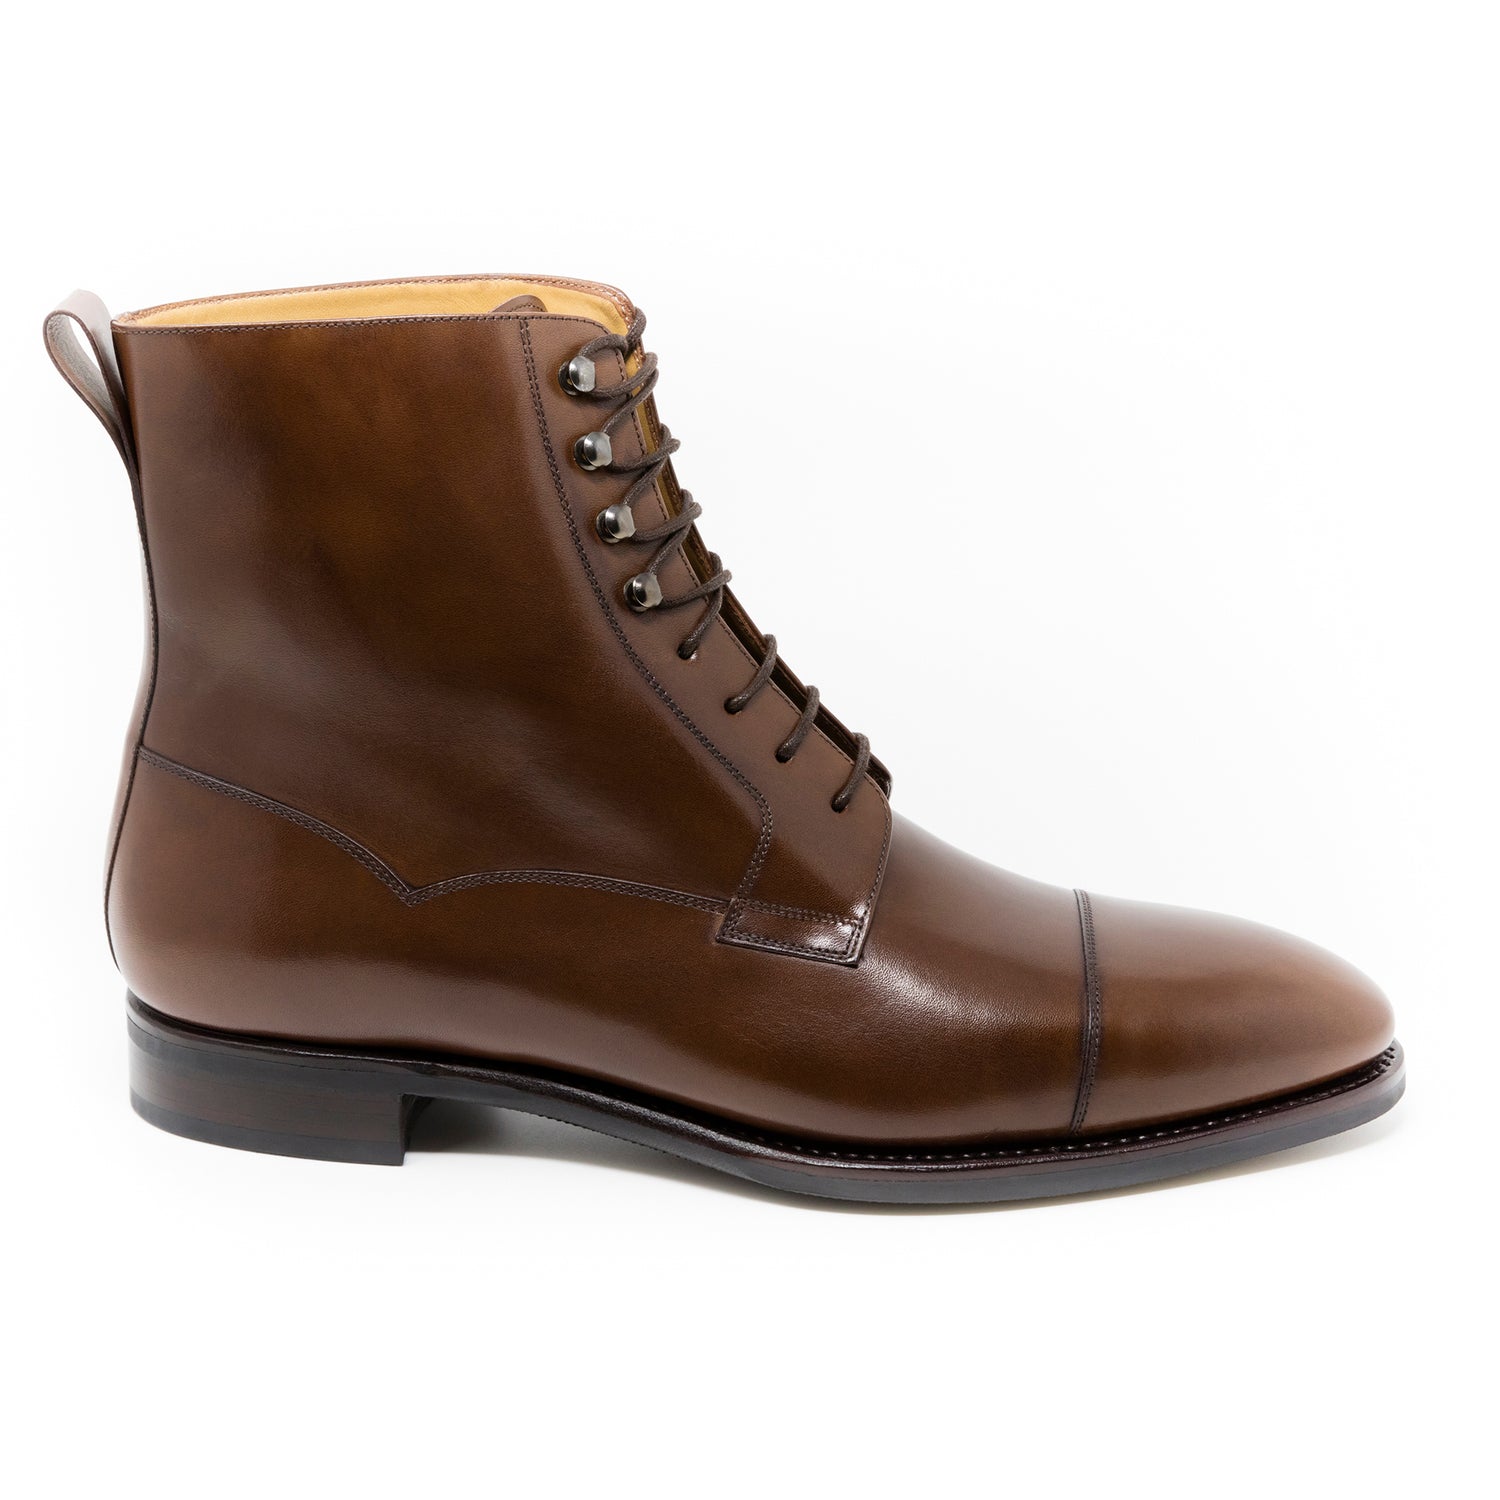 TLB Mallorca leather shoes 140 / GOYA / VEGANO BROWN